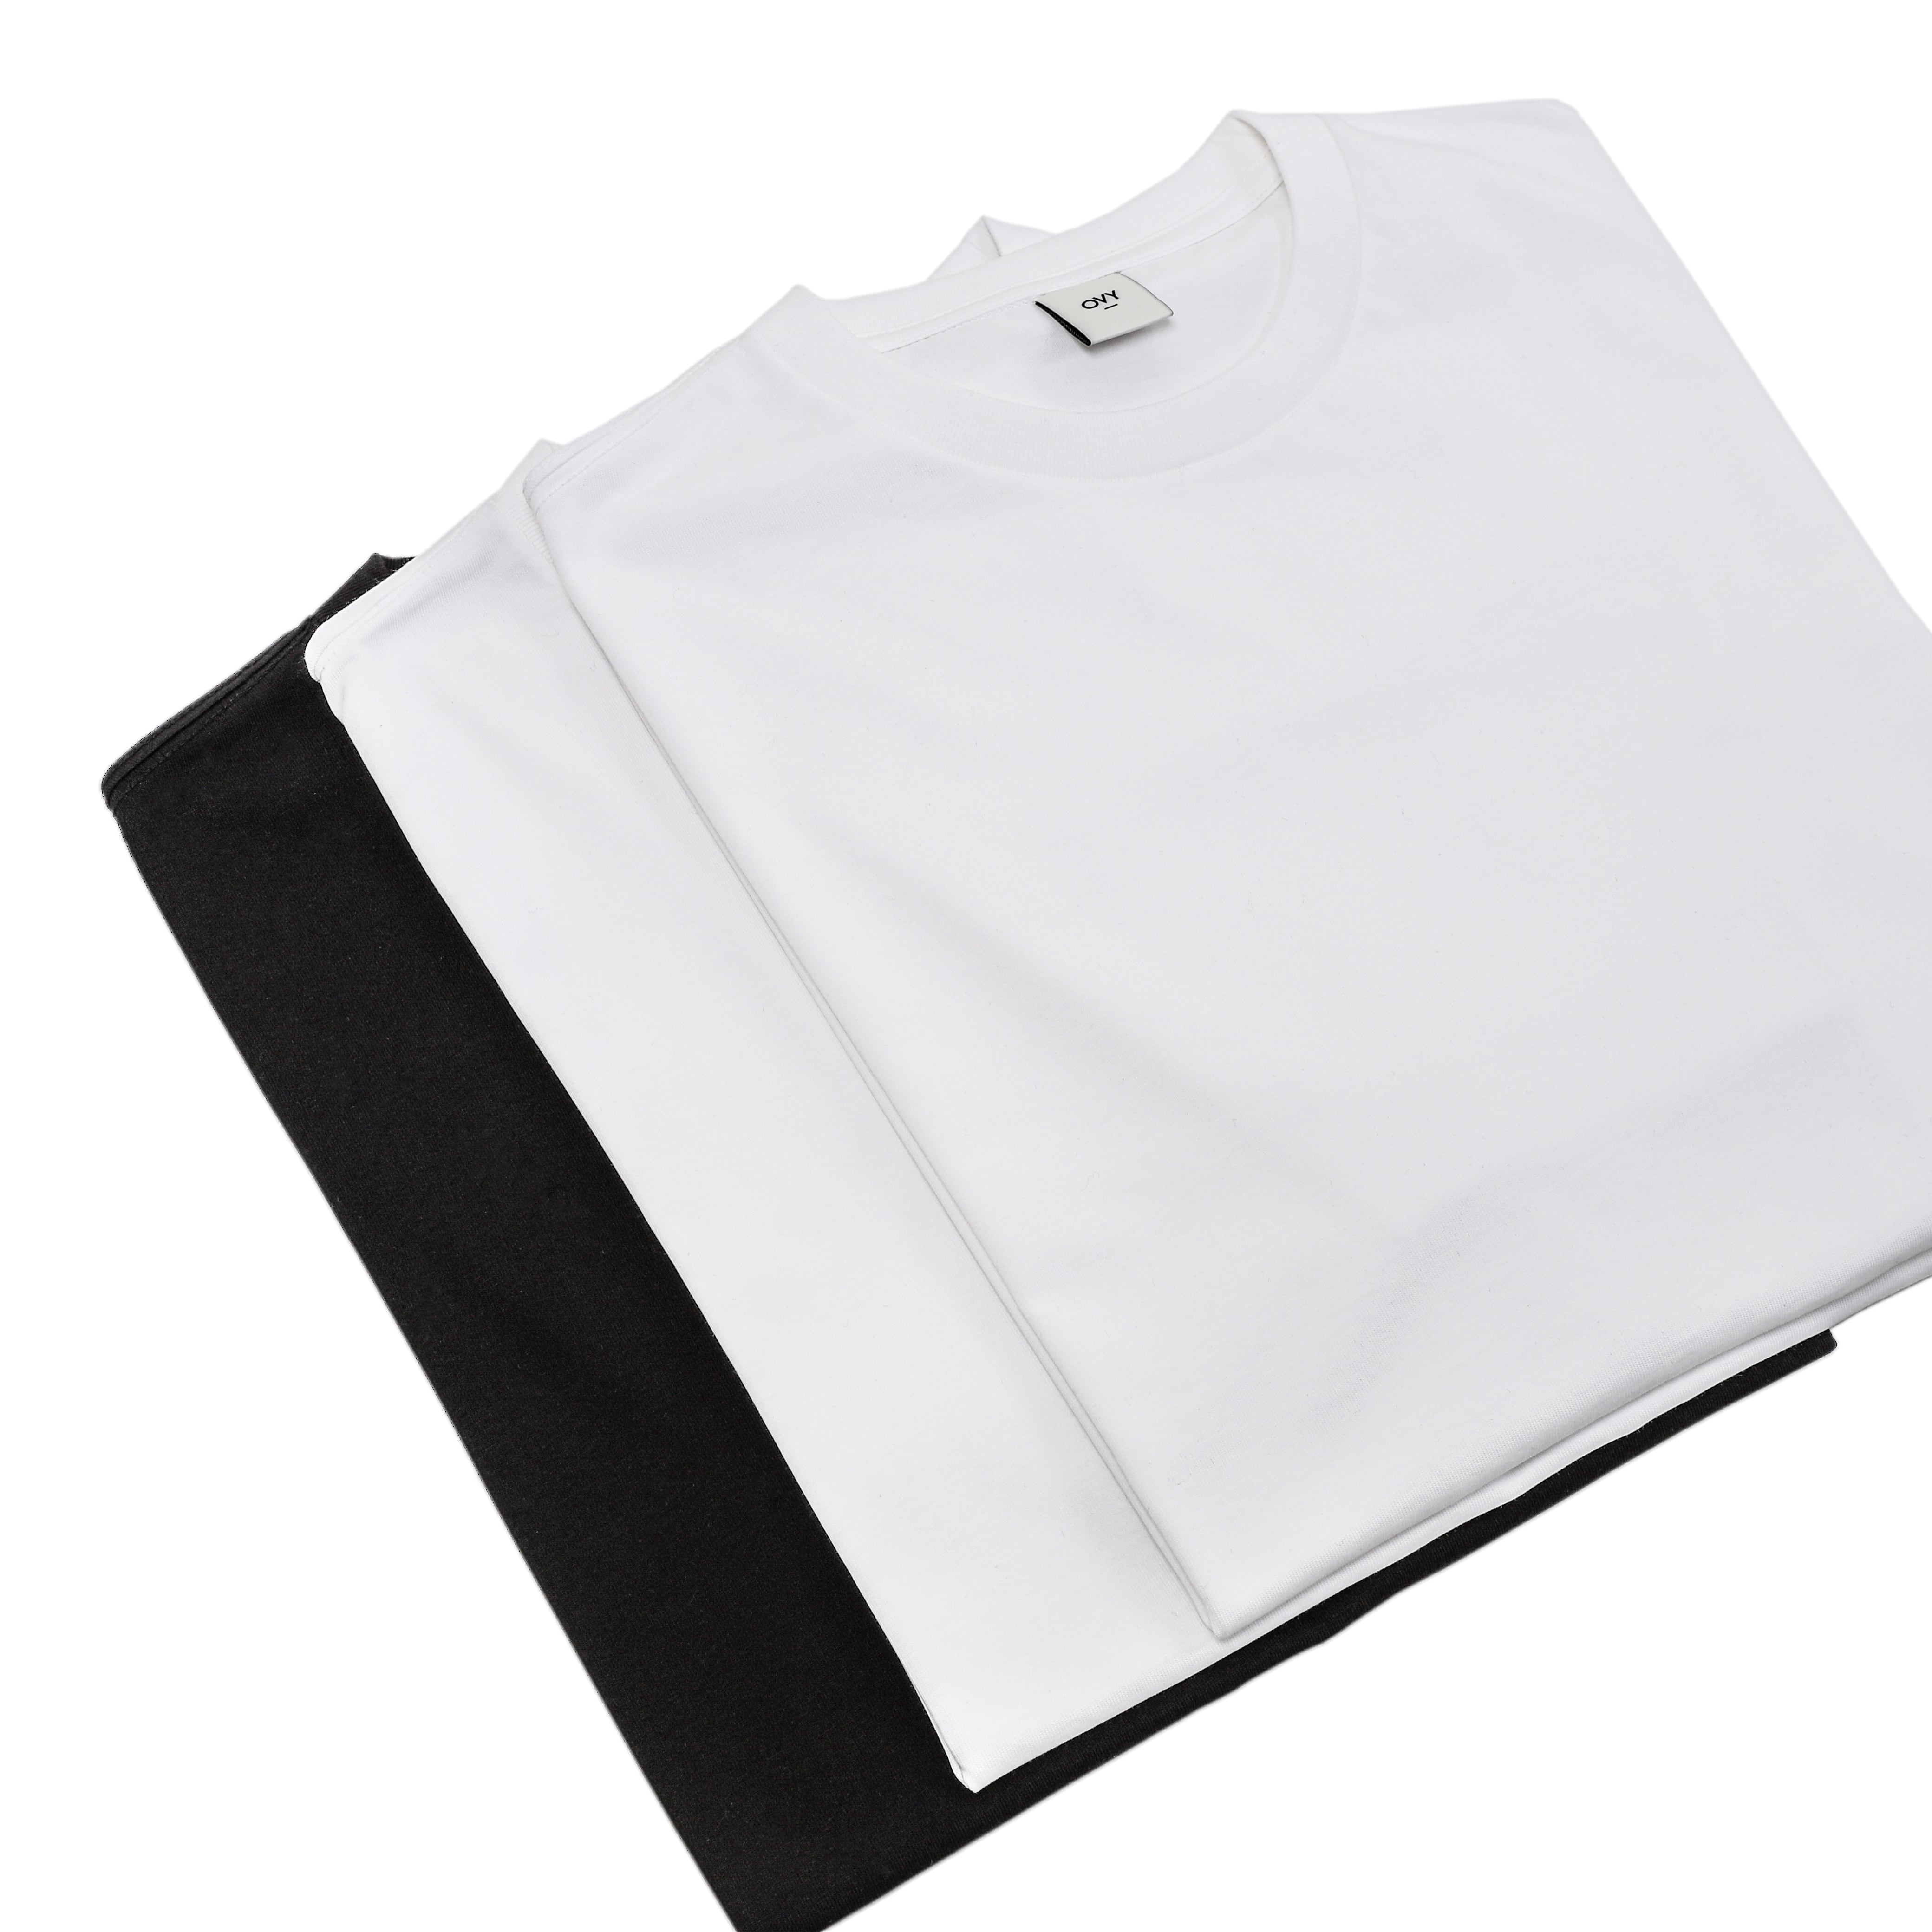 OVY Fine Cotton Basic 3pac T-shirts